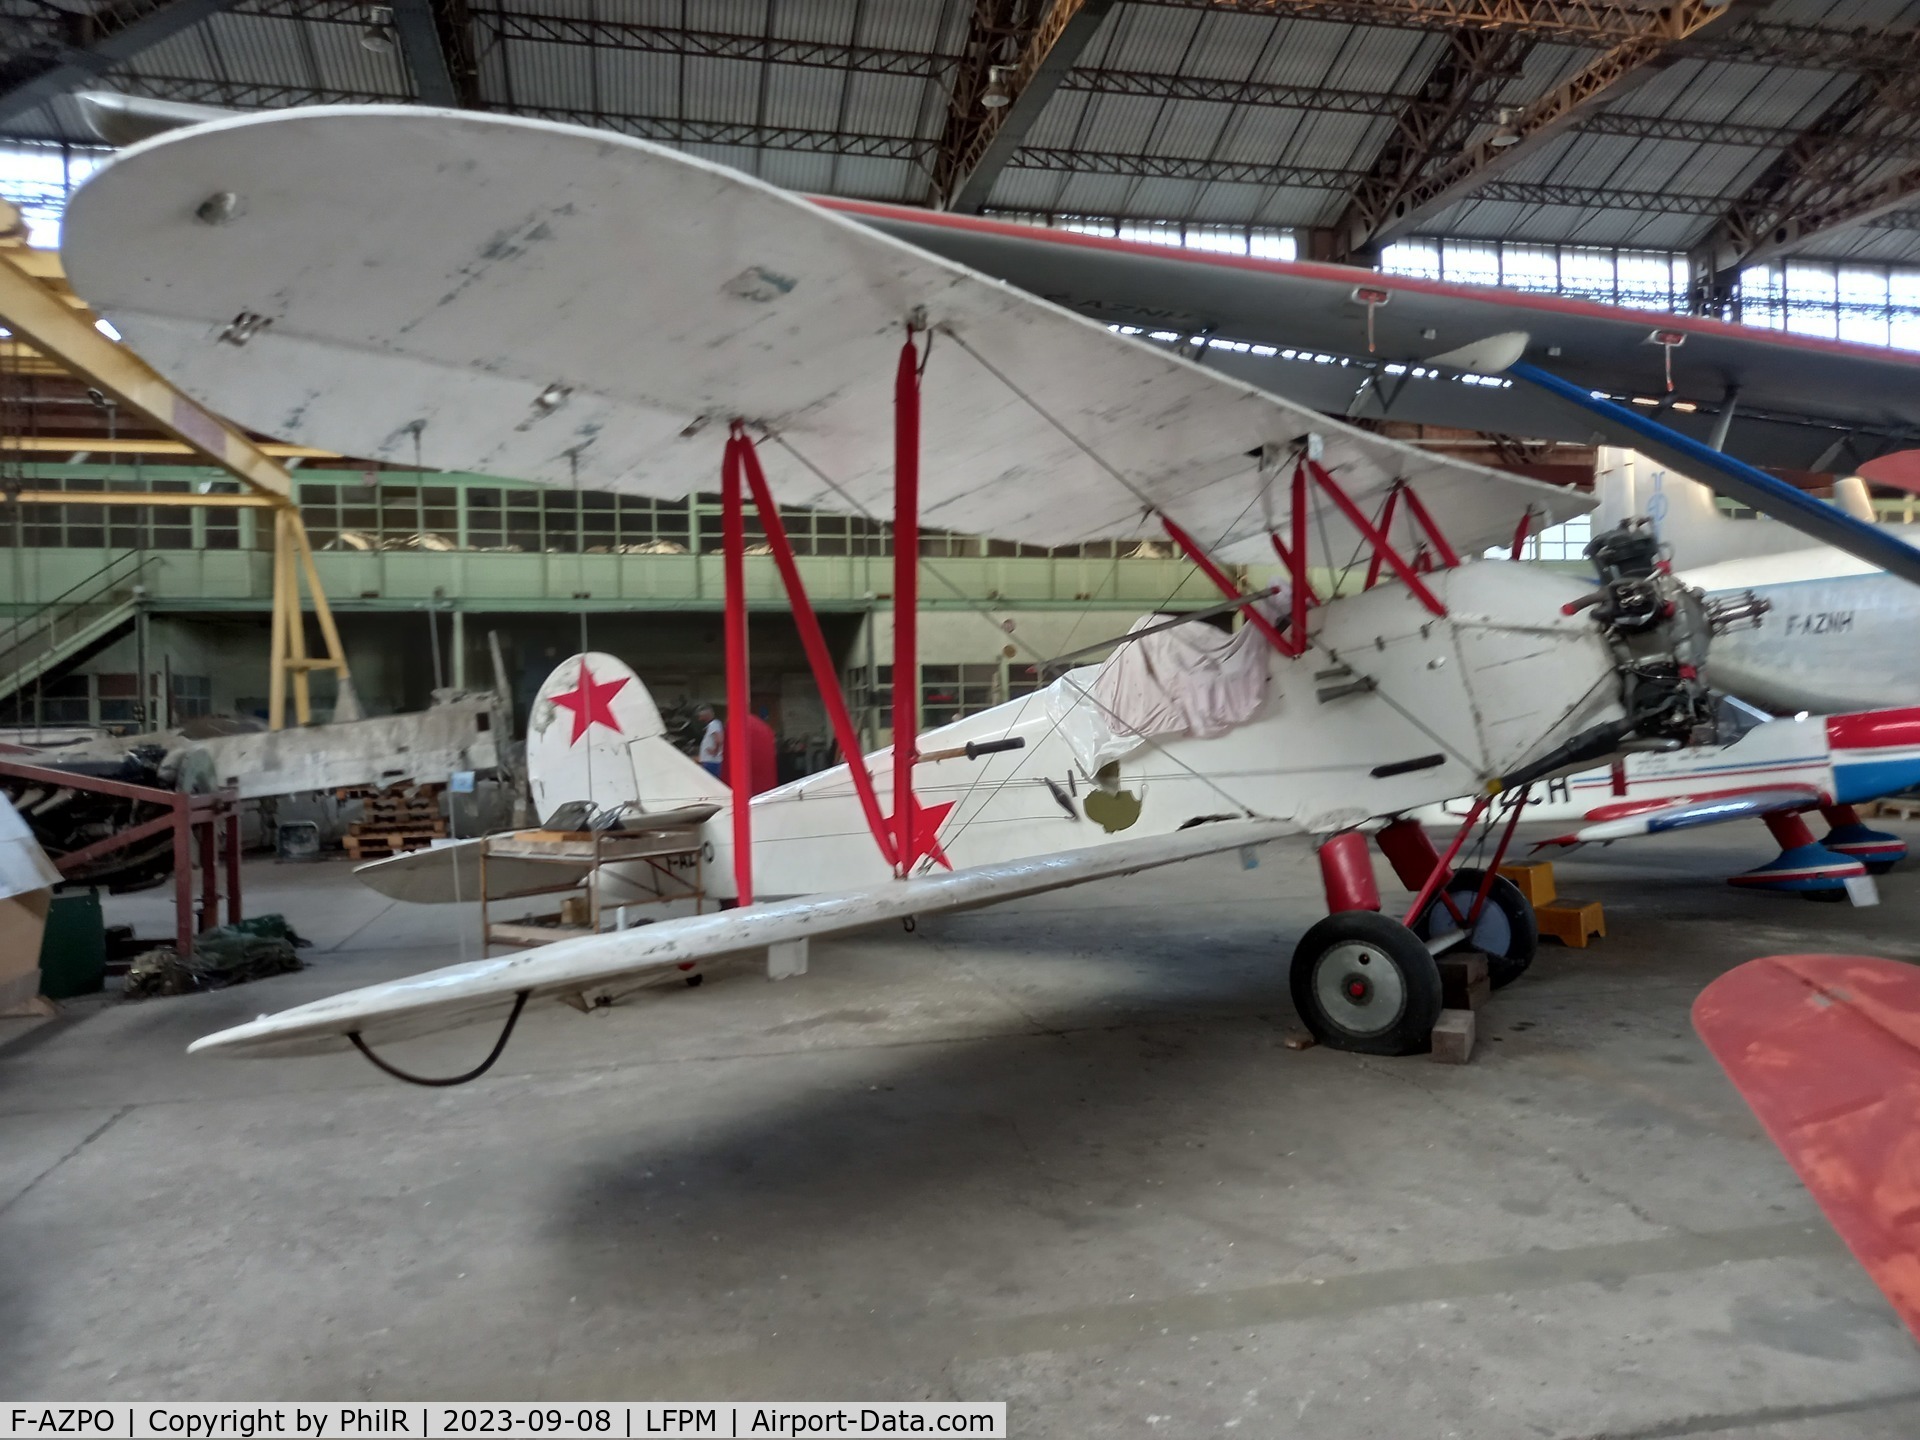 F-AZPO, Polikarpov Po-2 C/N 49026, F-AZPO Polikarpov Po.2 Musee De L'Aviation de Melun-Villaroche